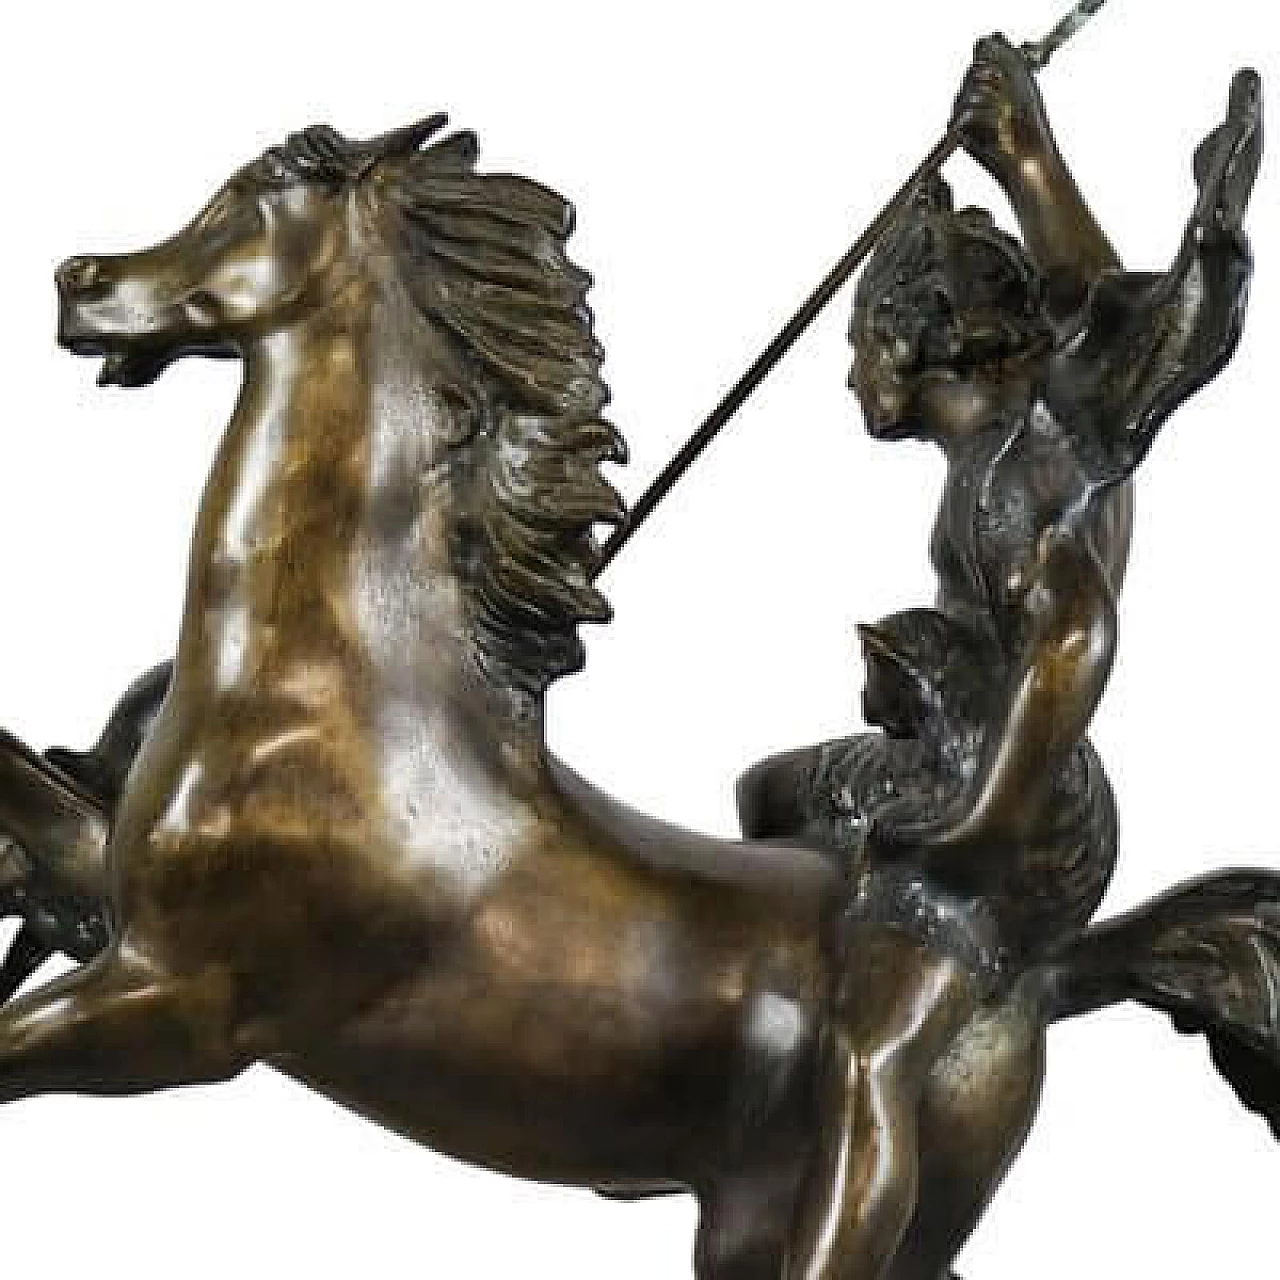 Indian warrior on horseback, reproduction after Tommaso Campajola, bronze sculpture 13